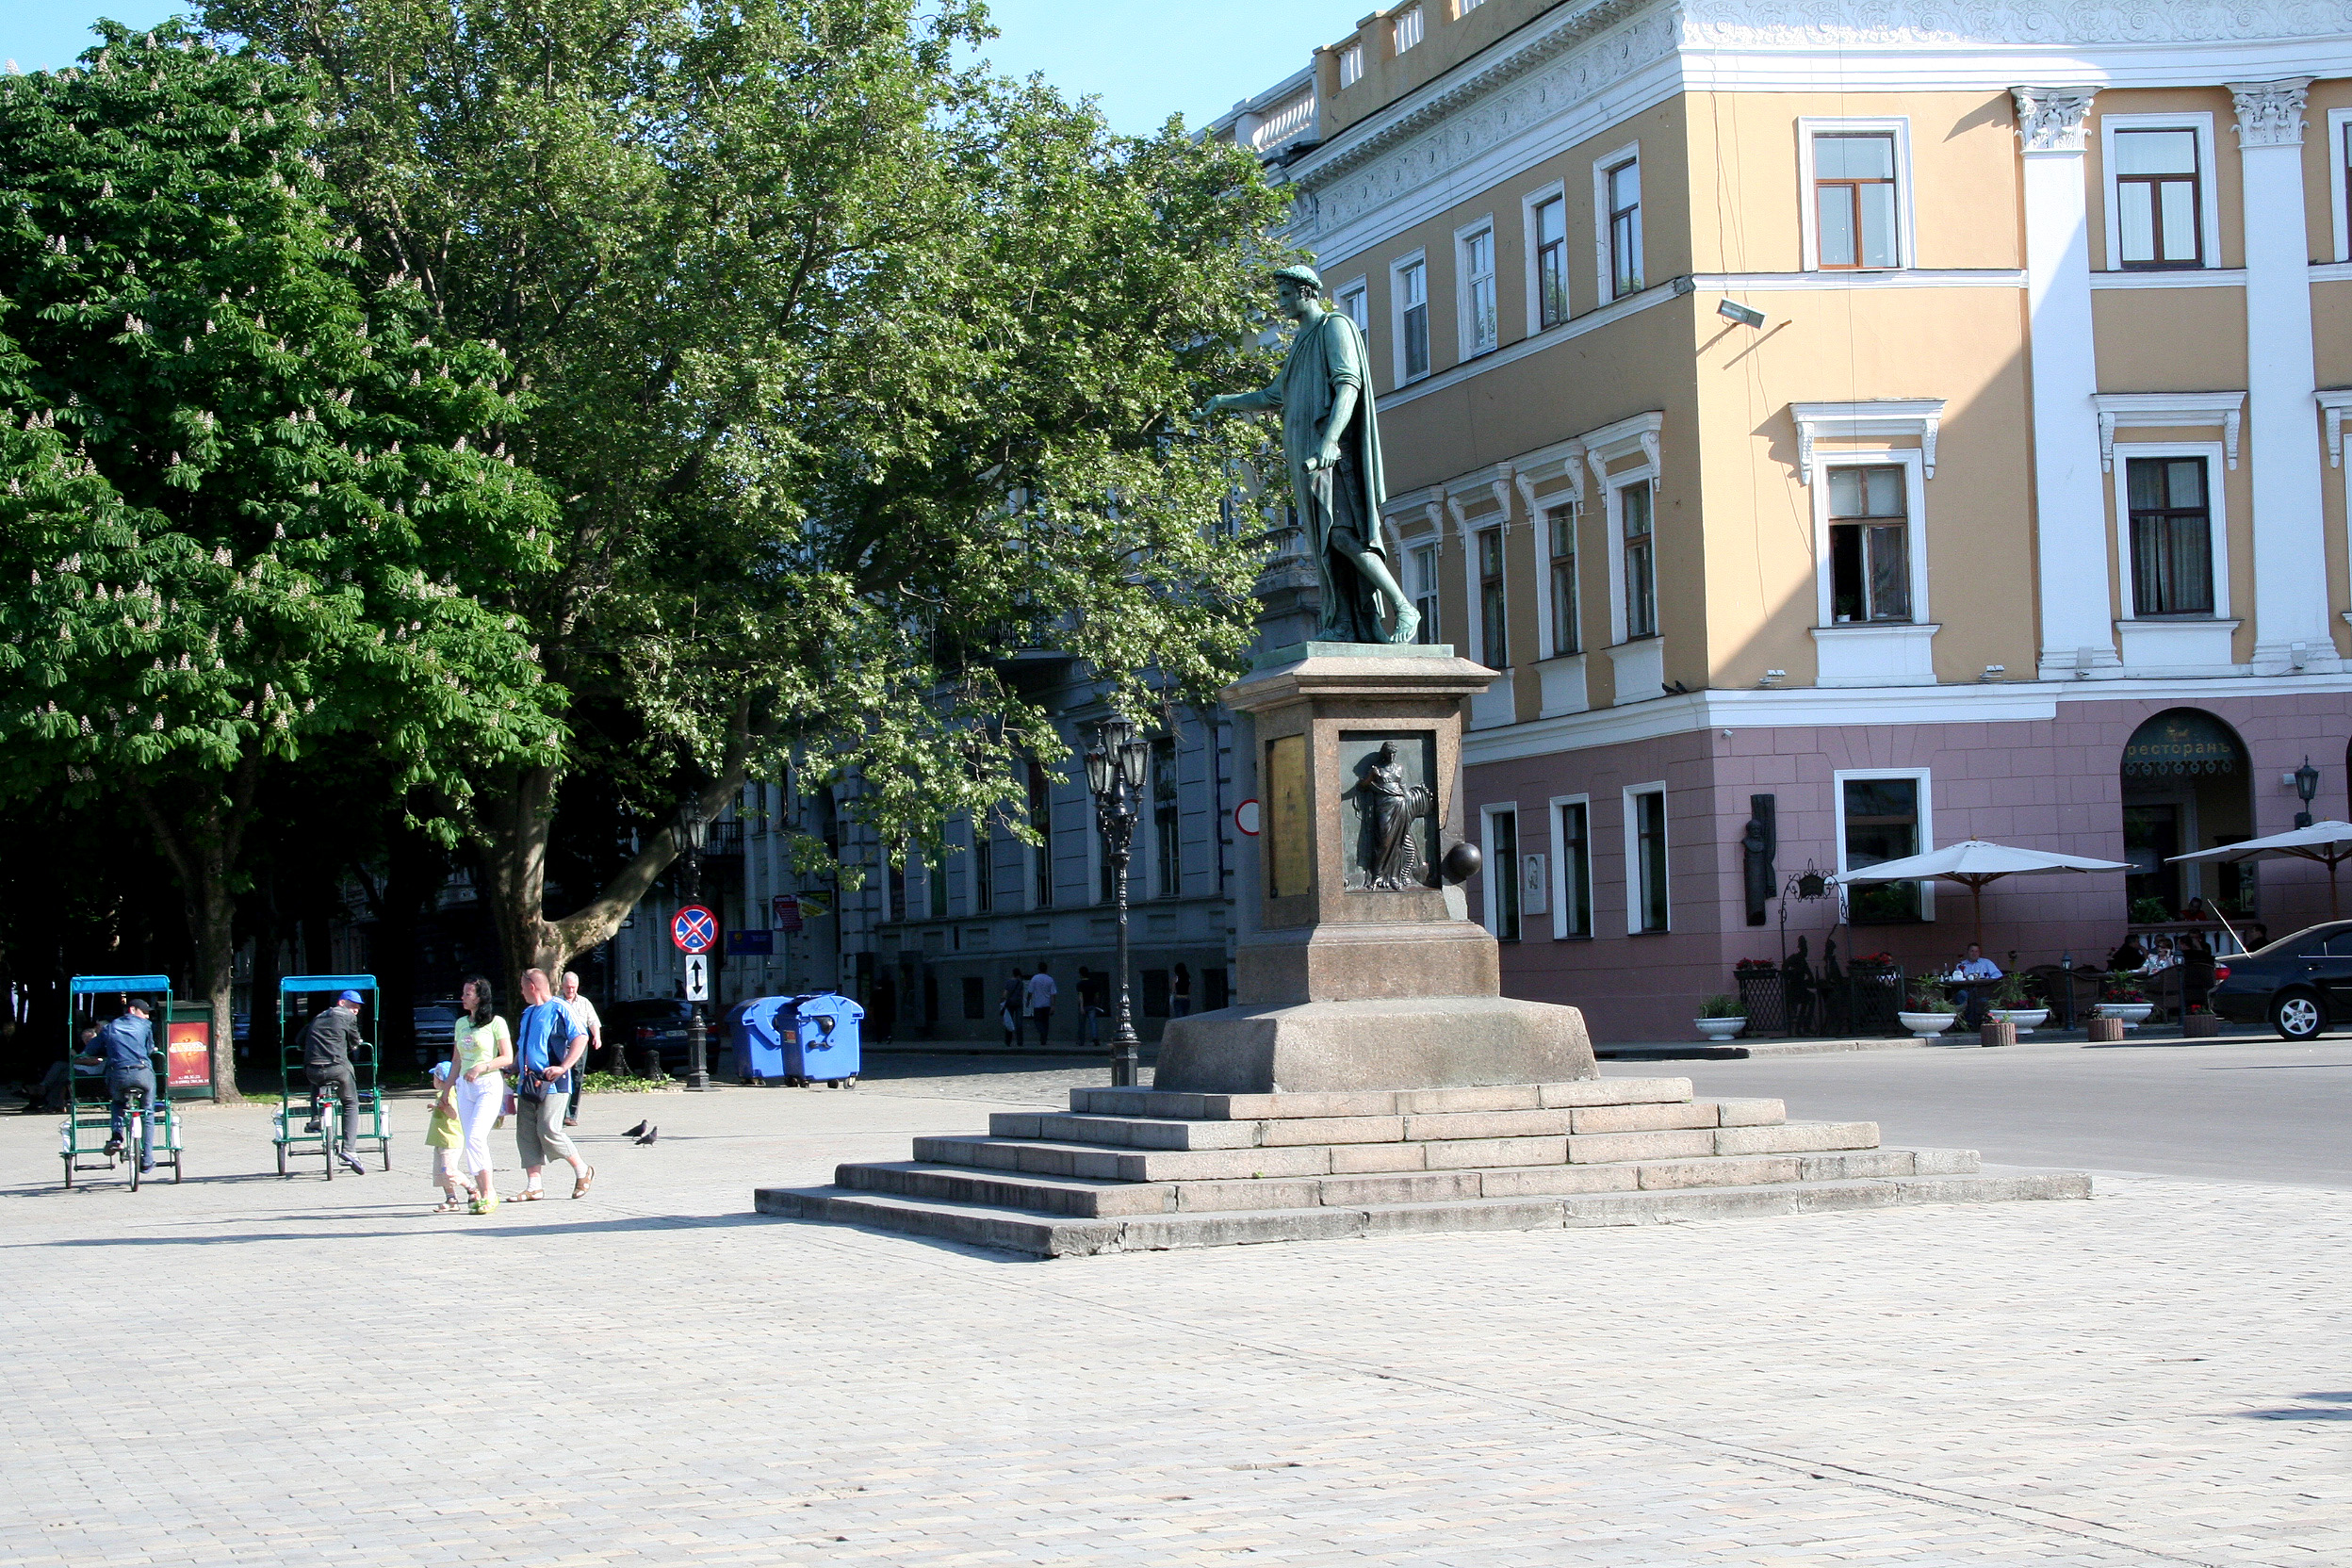 Statue in the square of the founder of Odessa, Duke de Richelieu.